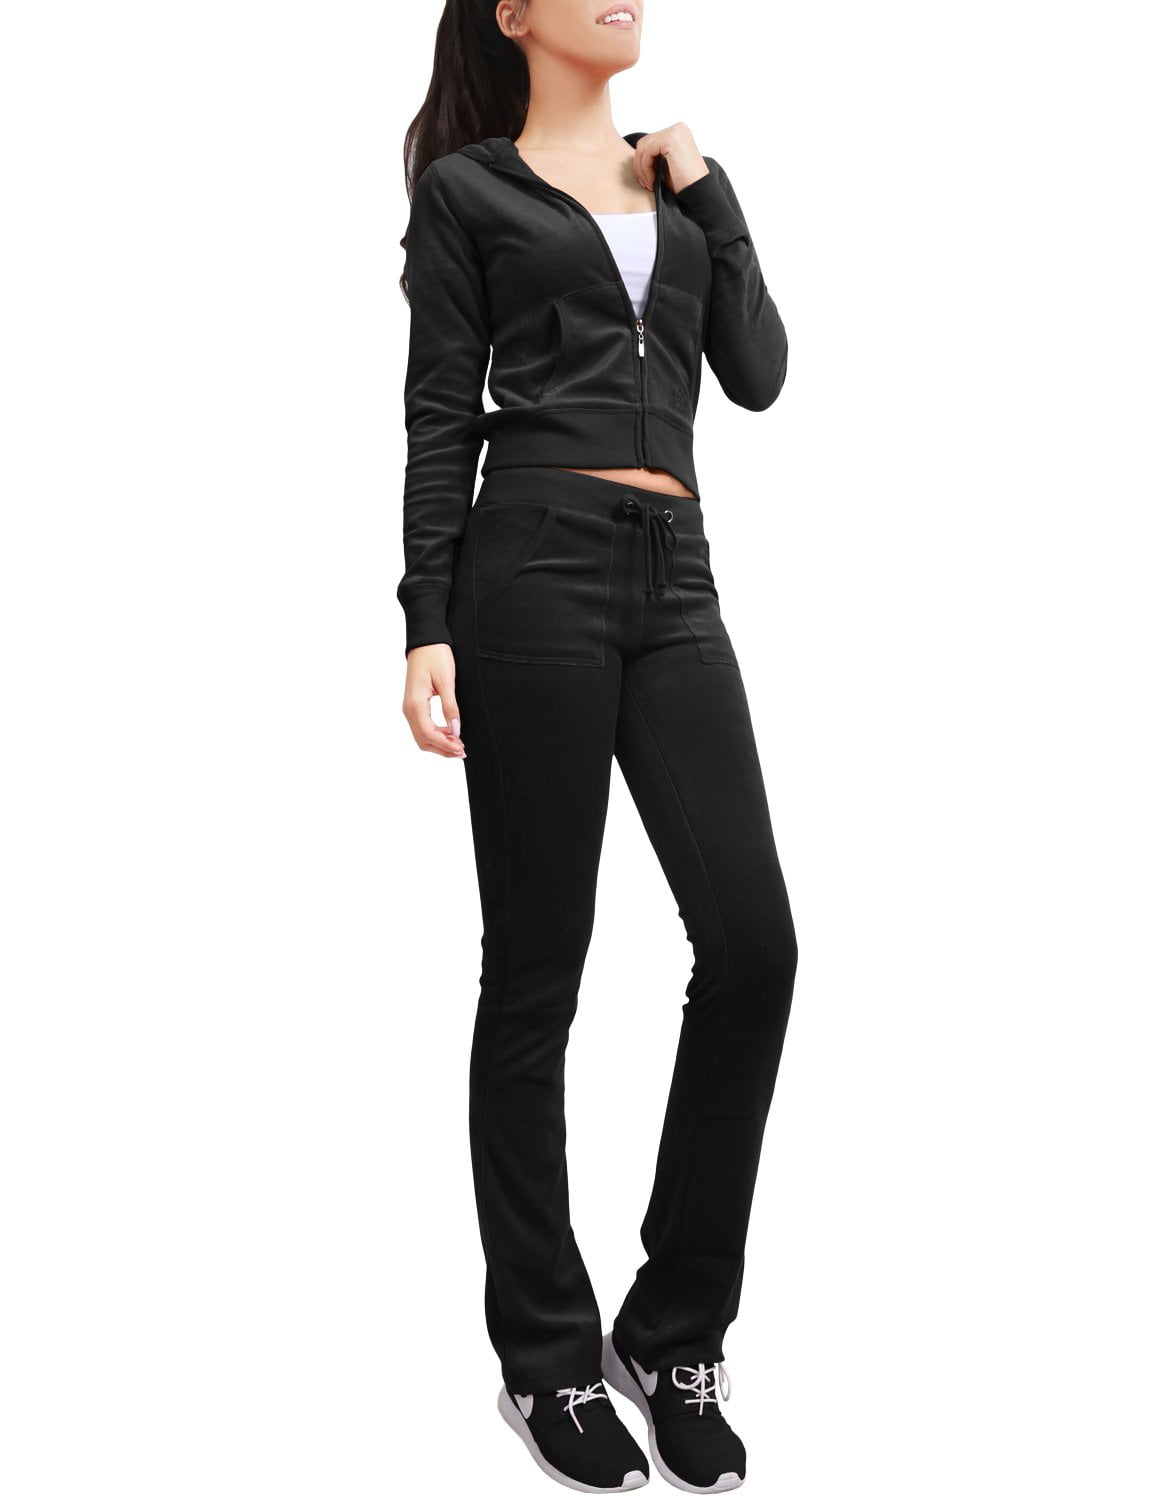 J. METHOD Women's Tracksuit Set Casual 2 Piece Outfit Slim Fit Velour  Velvet Zip Up Hoodie Jacket Top and Sweatpants Sweatsuit NEWTS03 Black S -  Walmart.com